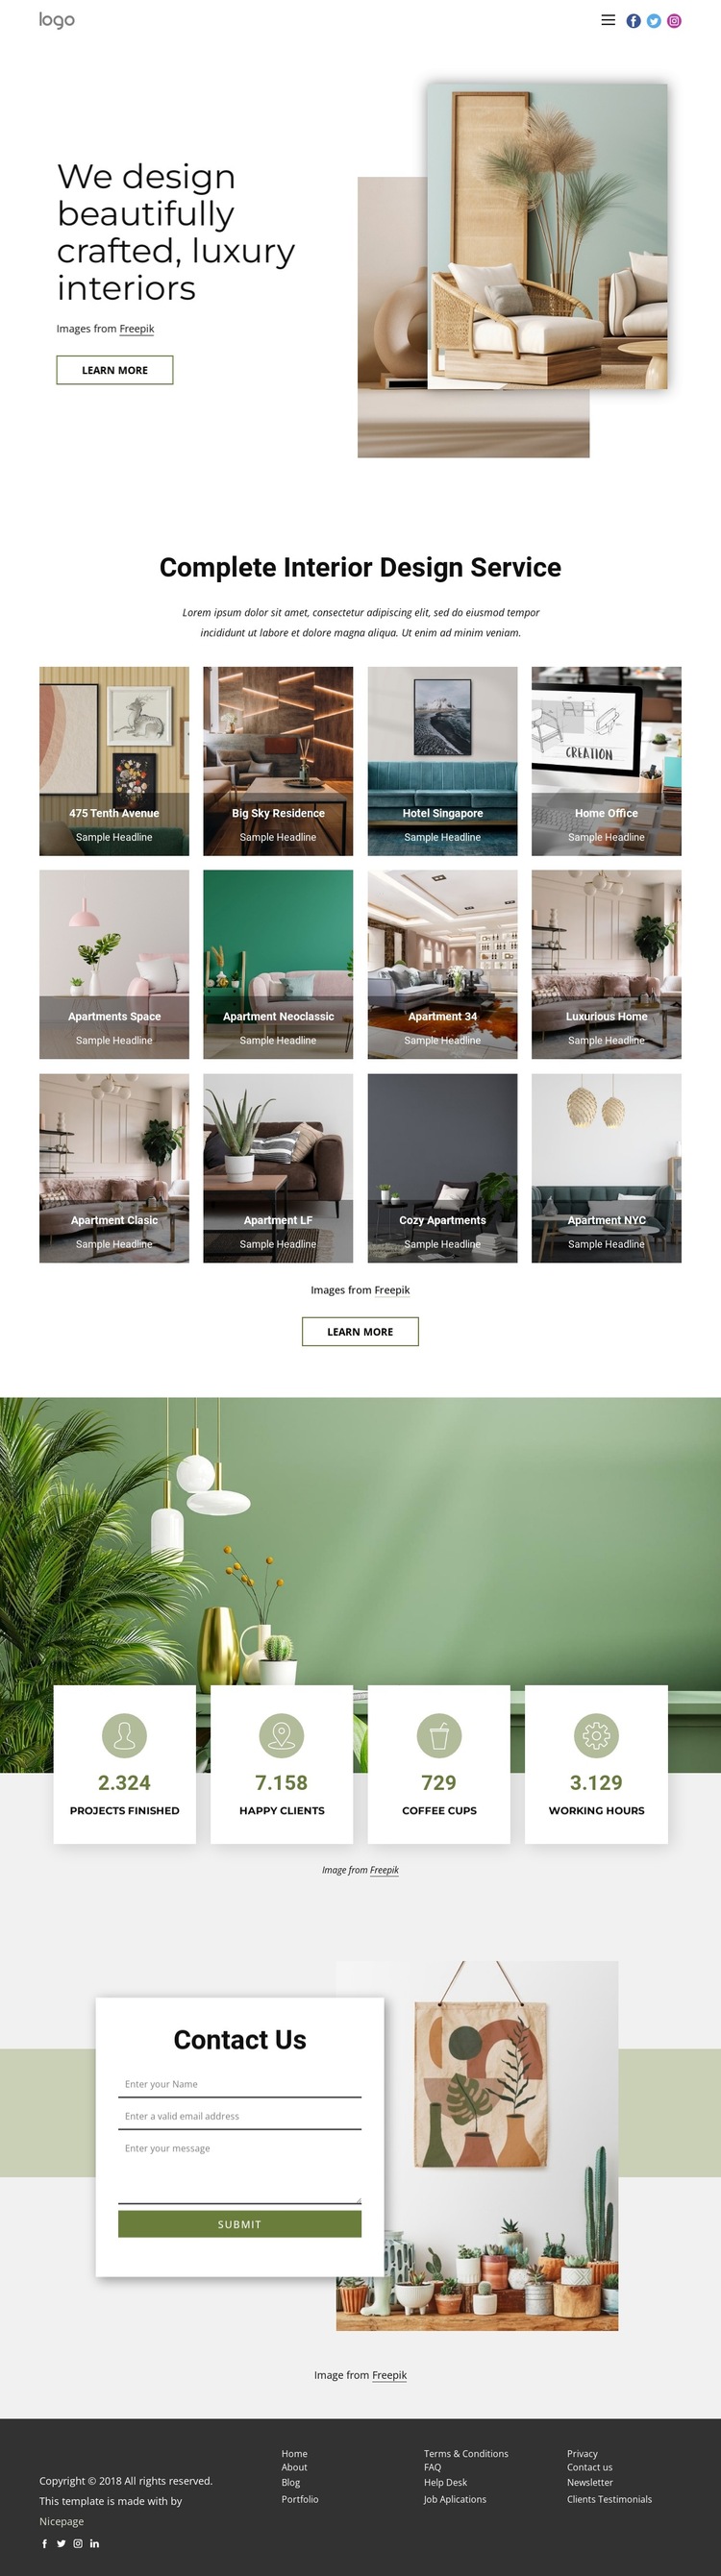 We design luxury interiors HTML5 Template